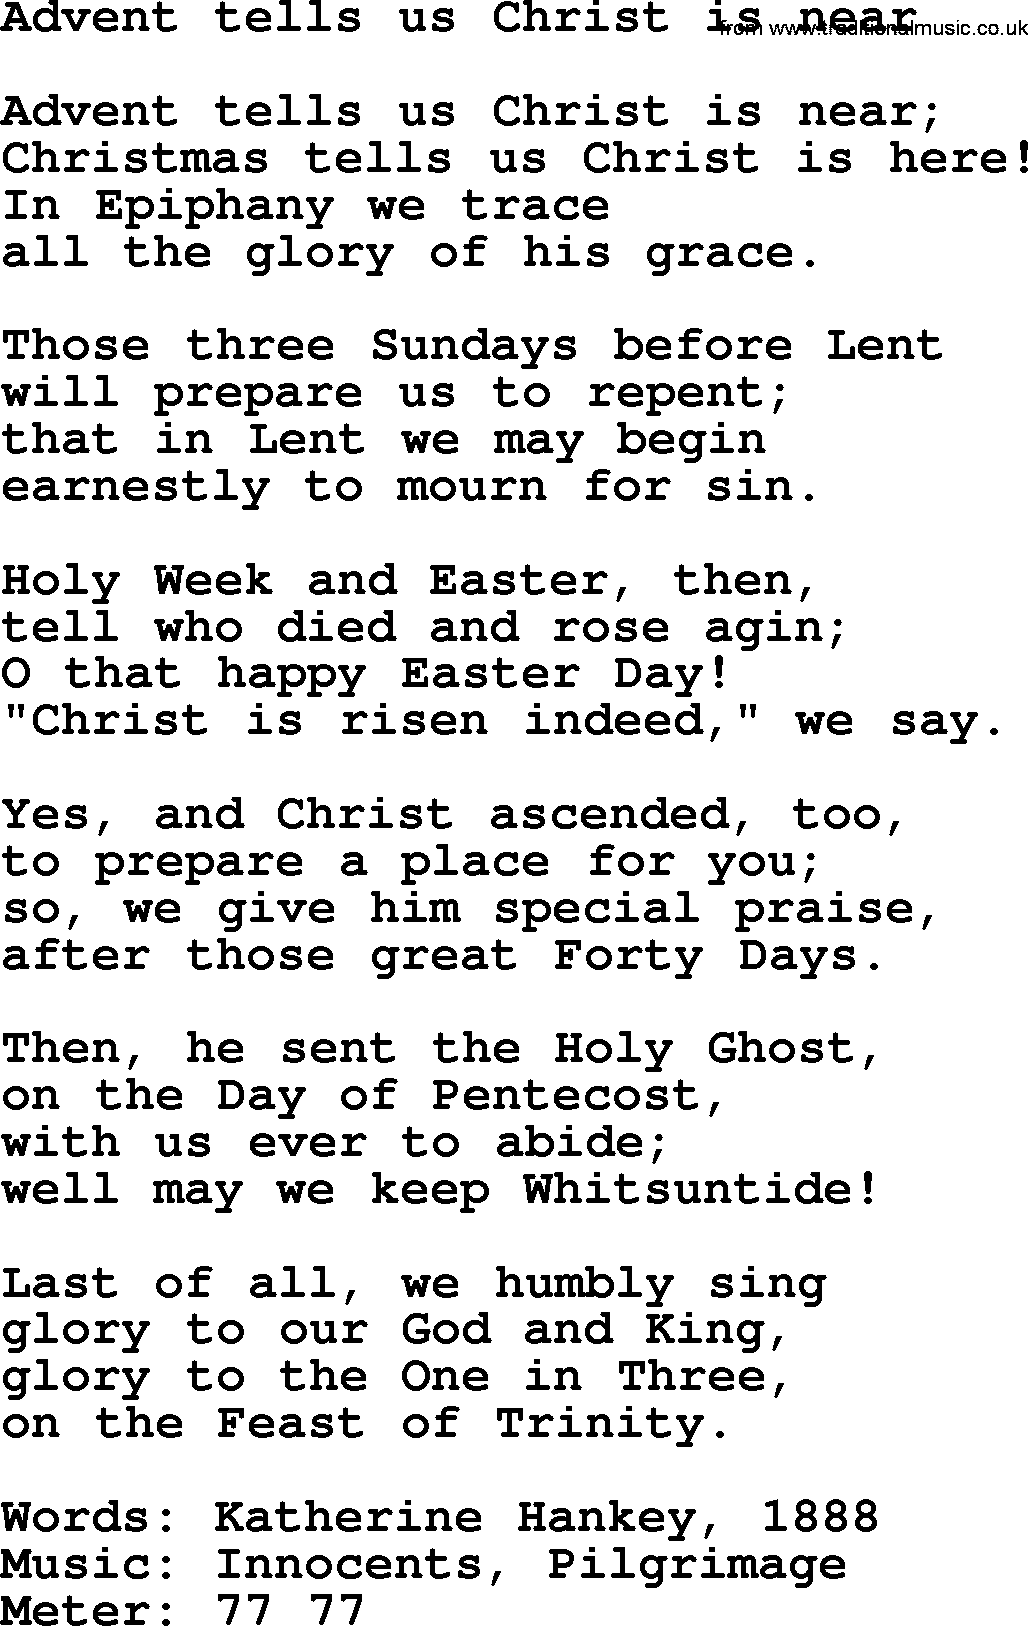 Book of Common Praise Hymn: Advent Tells Us Christ Is Near.txt lyrics with midi music